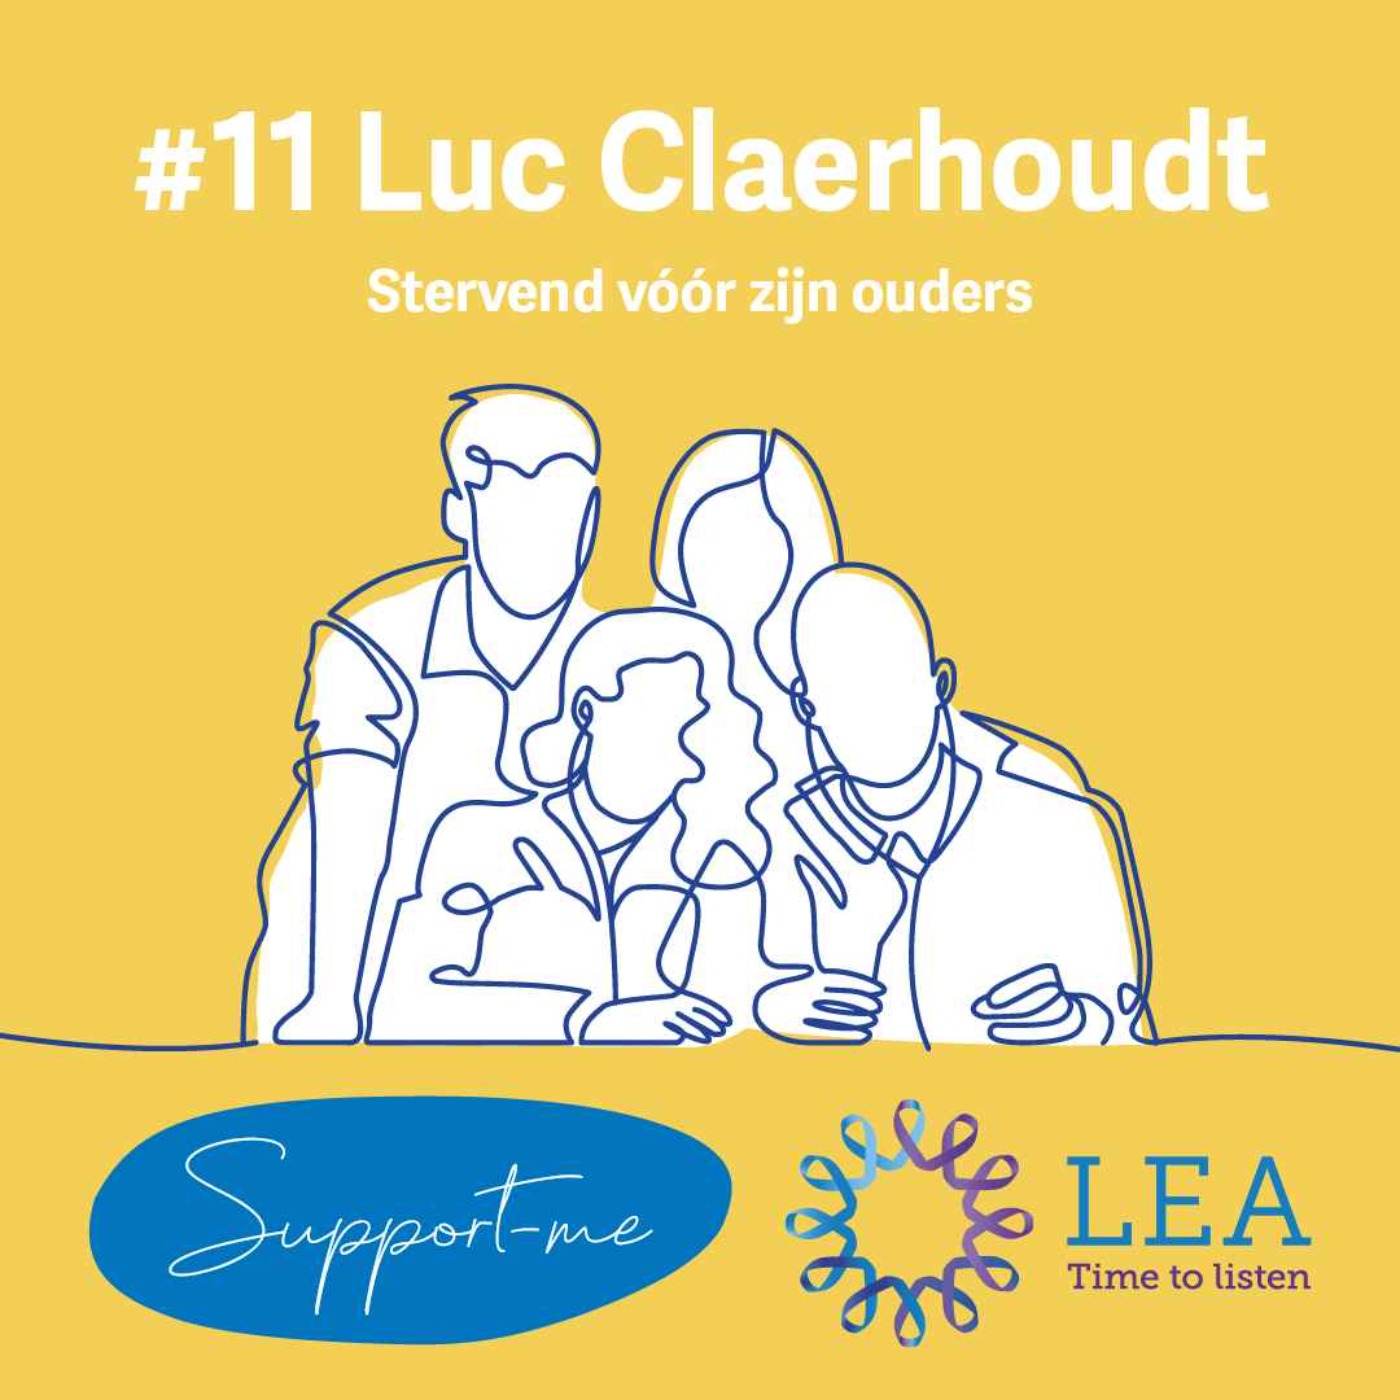 Luc Claerhoudt